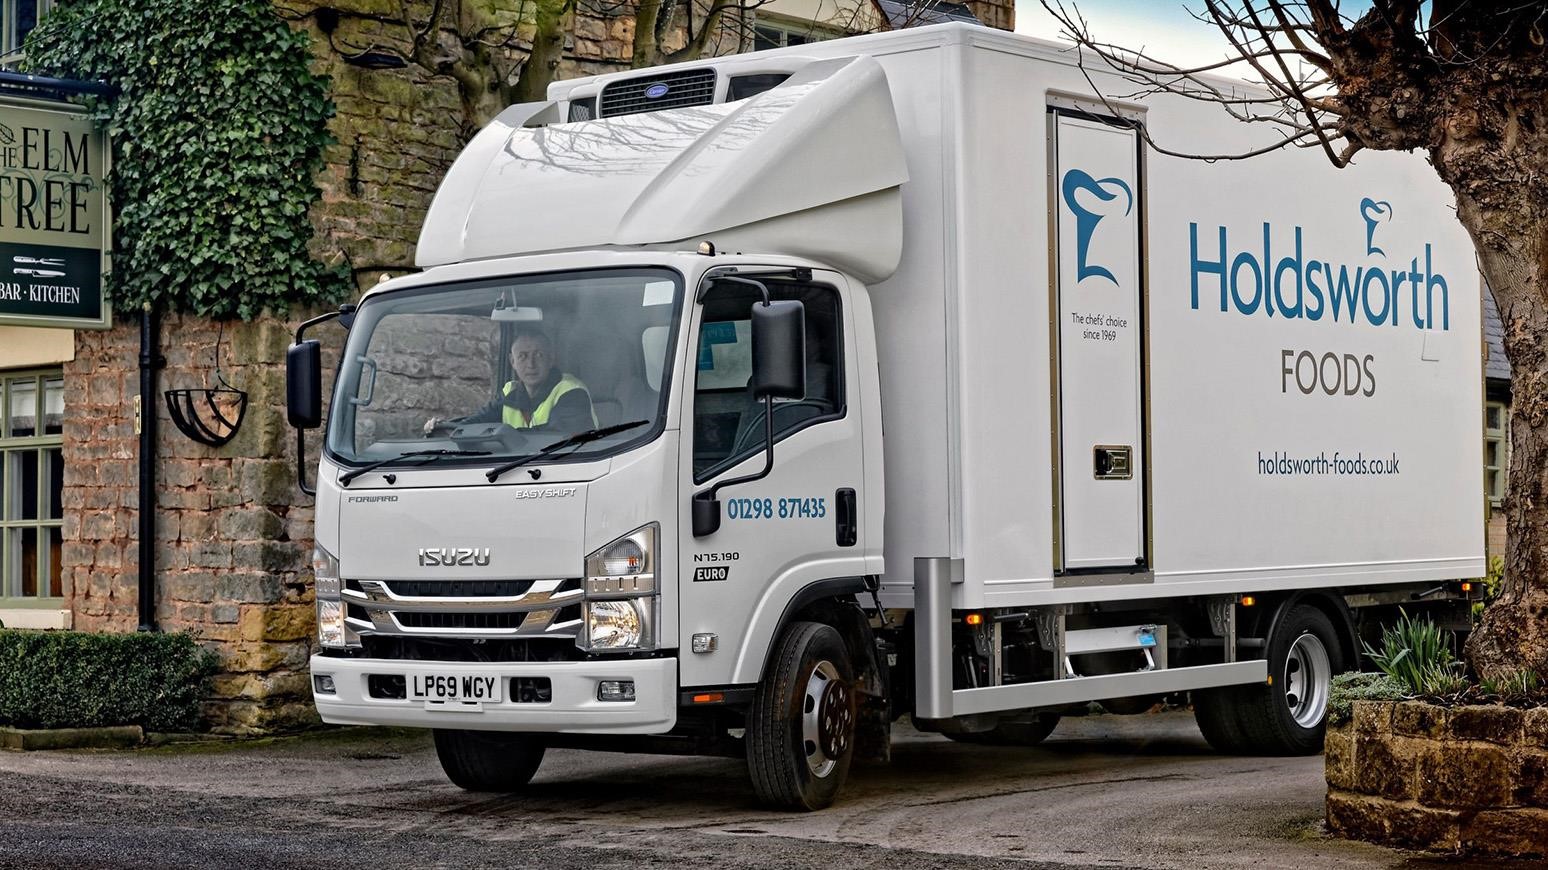 Derbyshire-Based Holdsworth Foods Adds Six New Isuzu N75.190 Refrigerated Trucks To Its Fleet